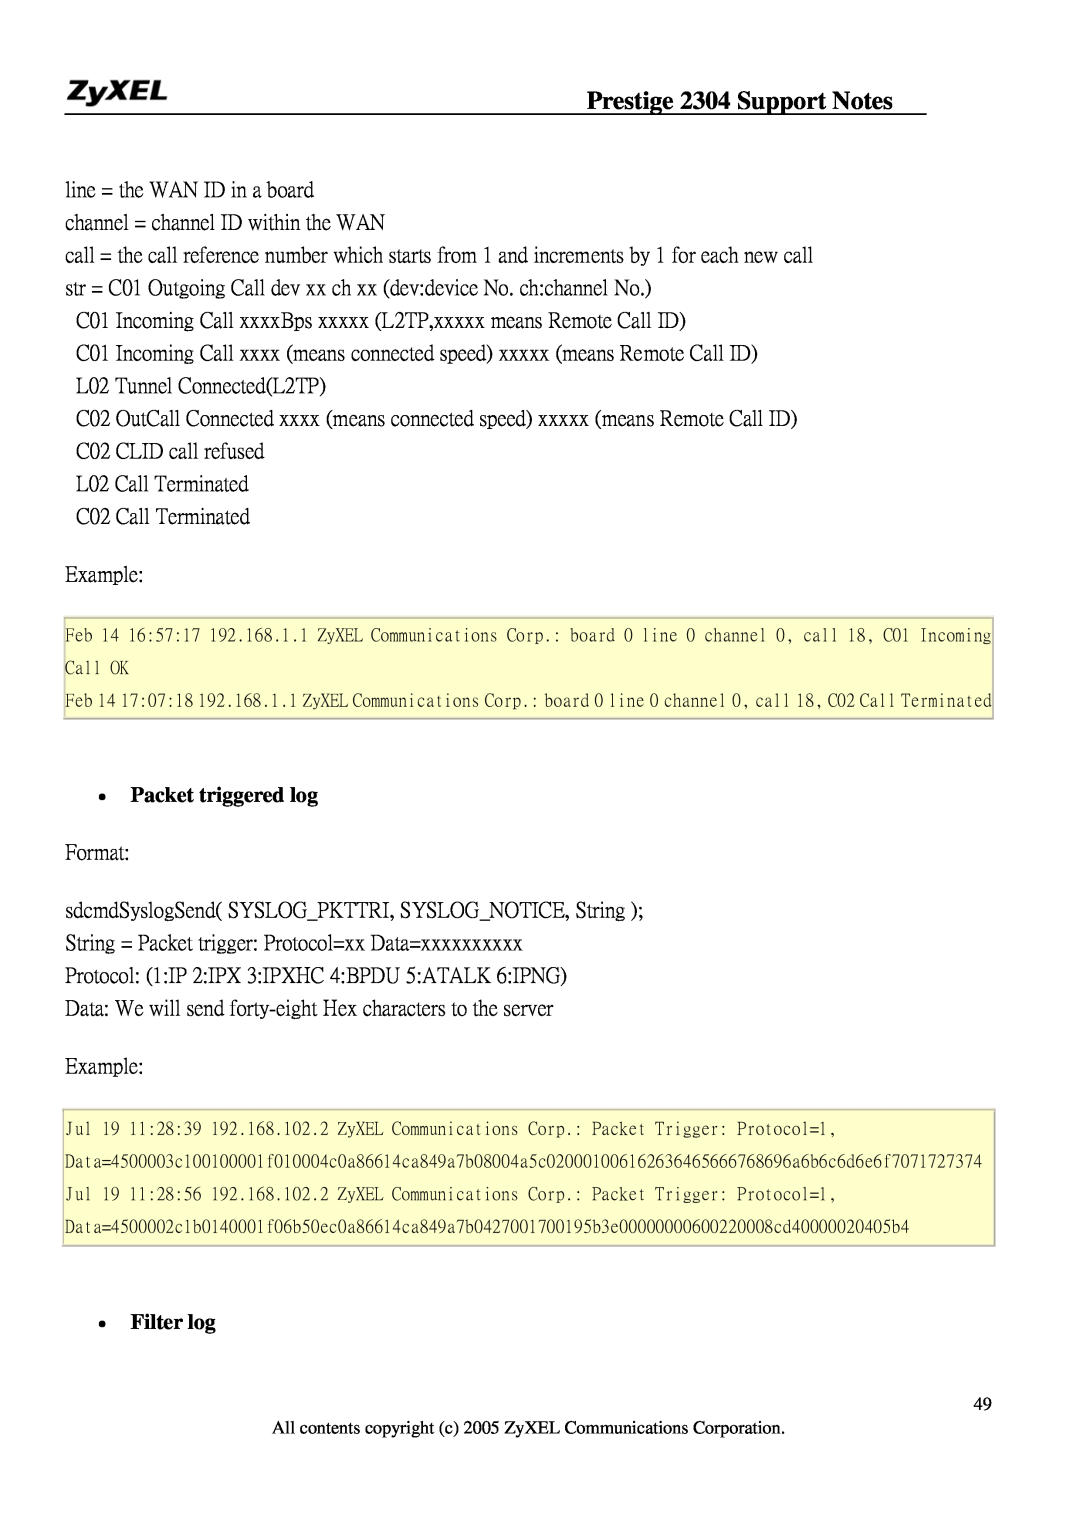 ZyXEL Communications 2304R-P1 manual Packet triggered log, Filter log, Prestige 2304 Support Notes 